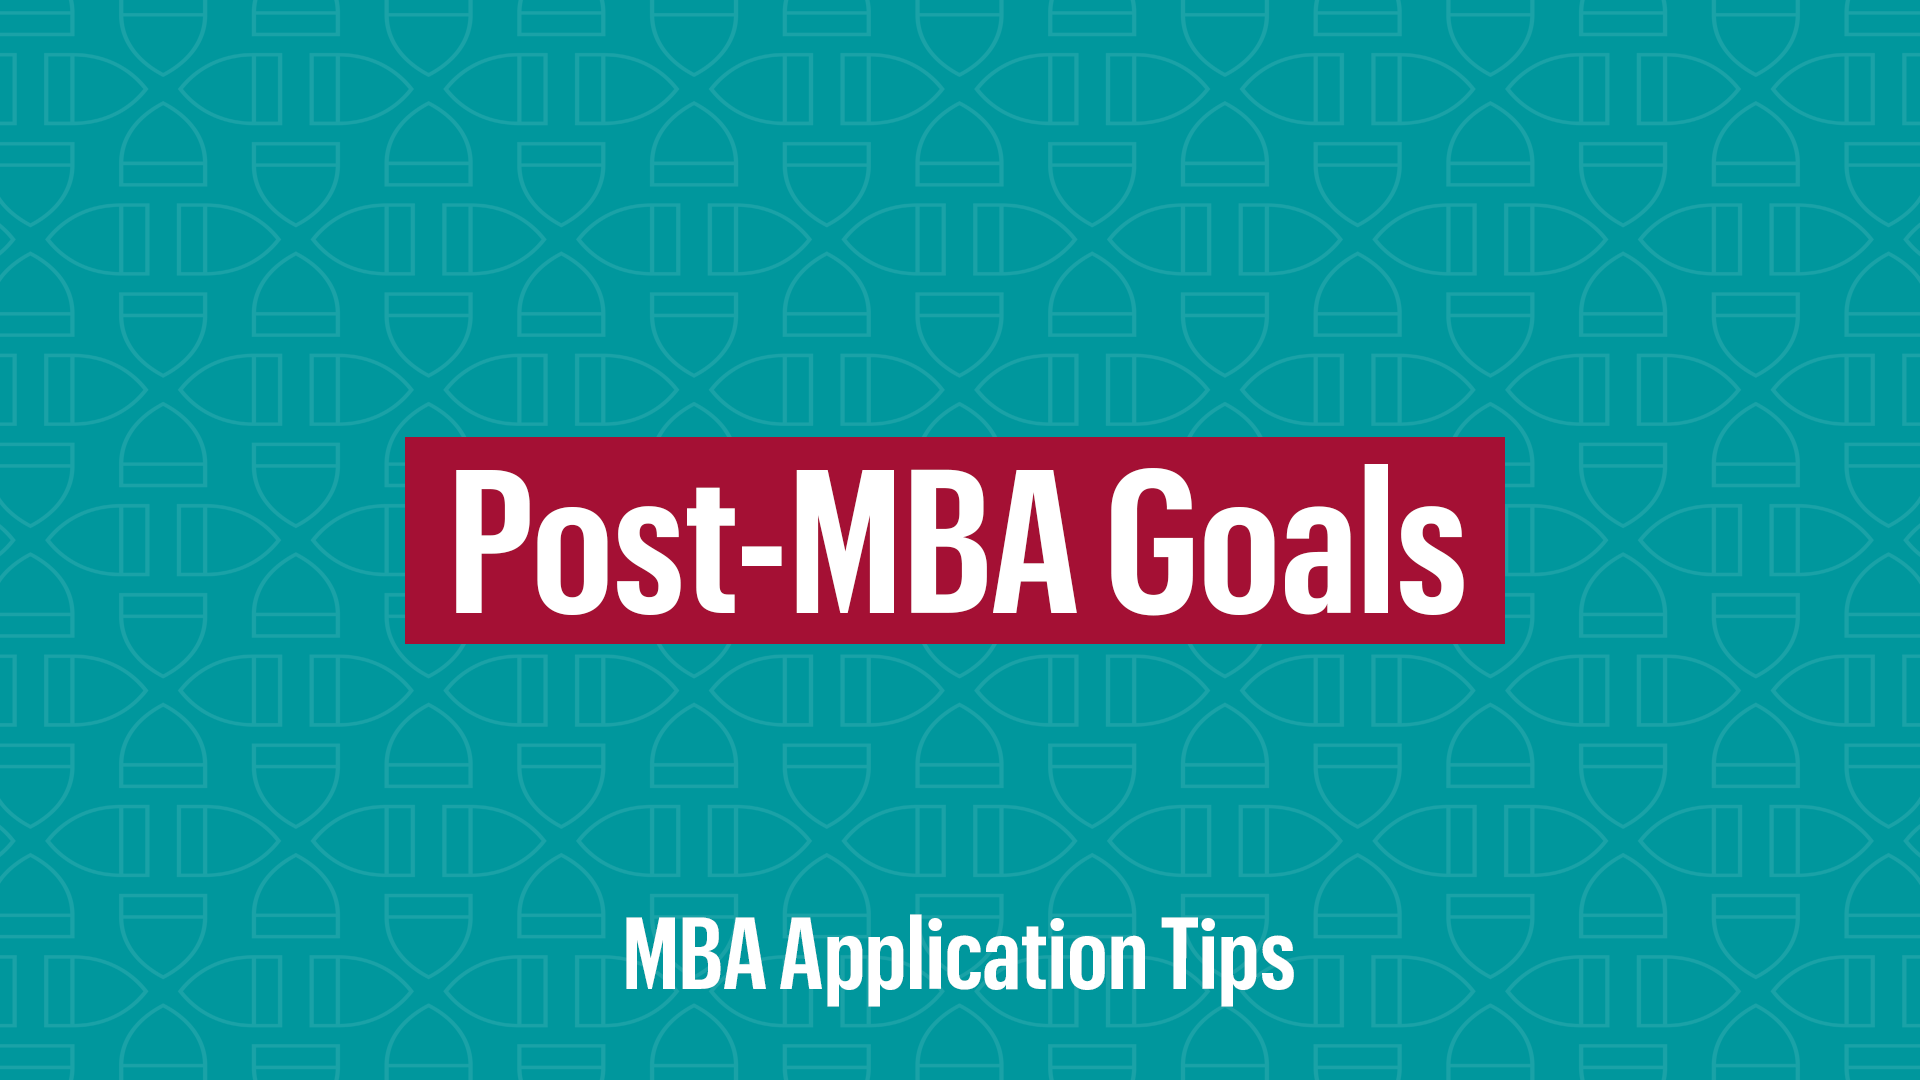 Post-MBA Goals Tips